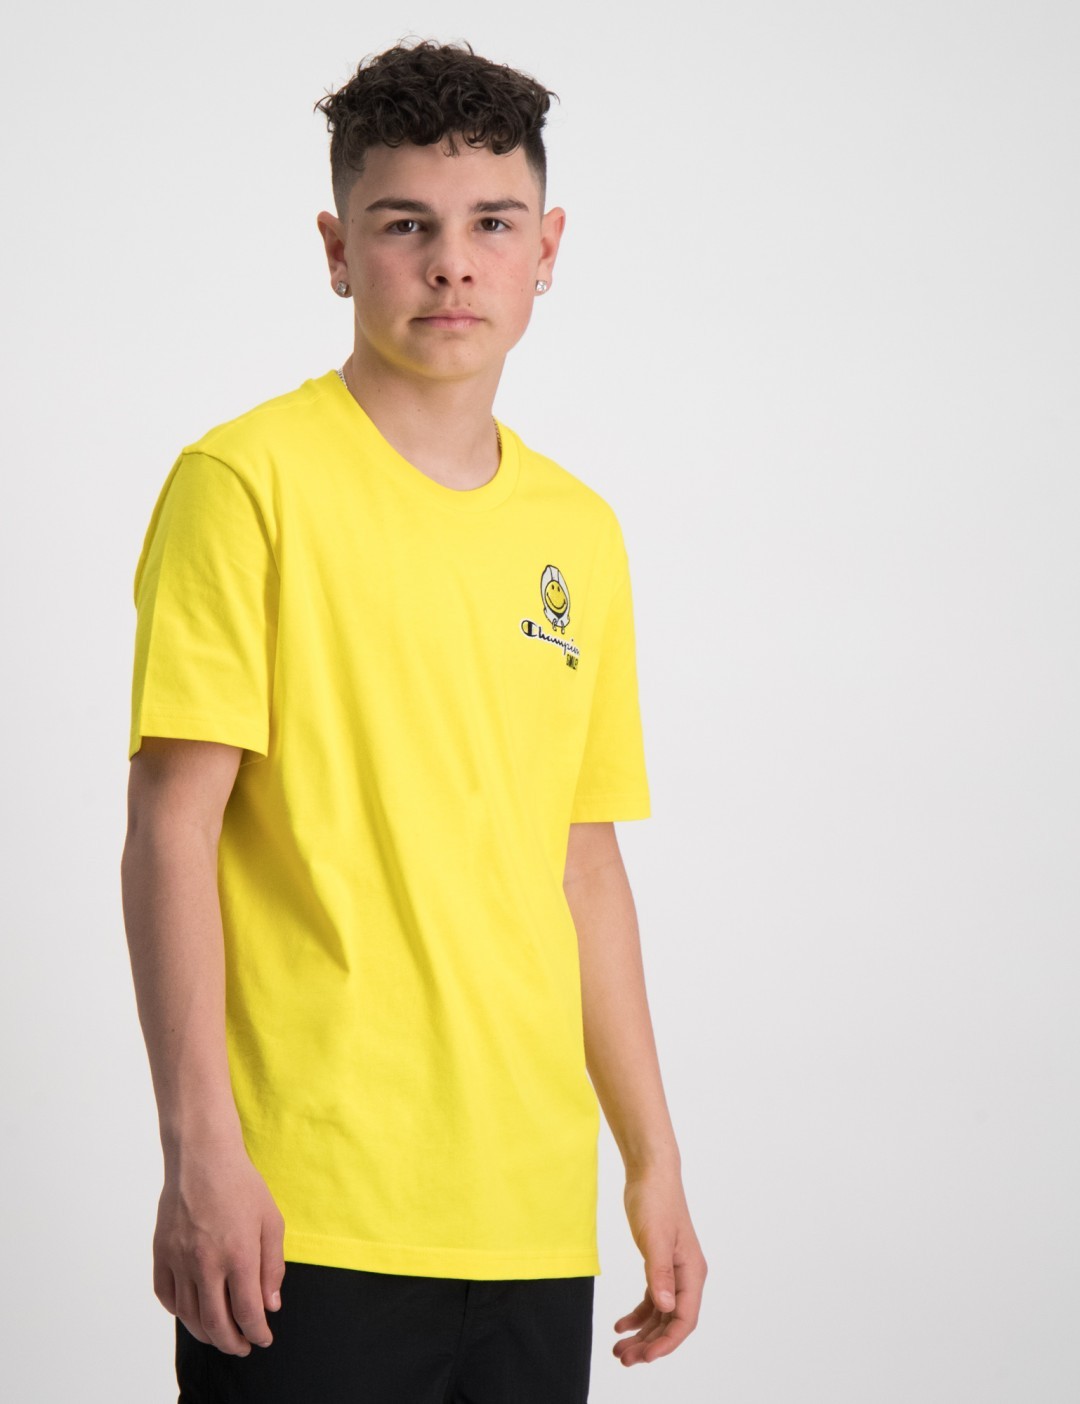 Susteen grad vrede Gul Crewneck T-Shirt til Dreng | Kids Brand Store